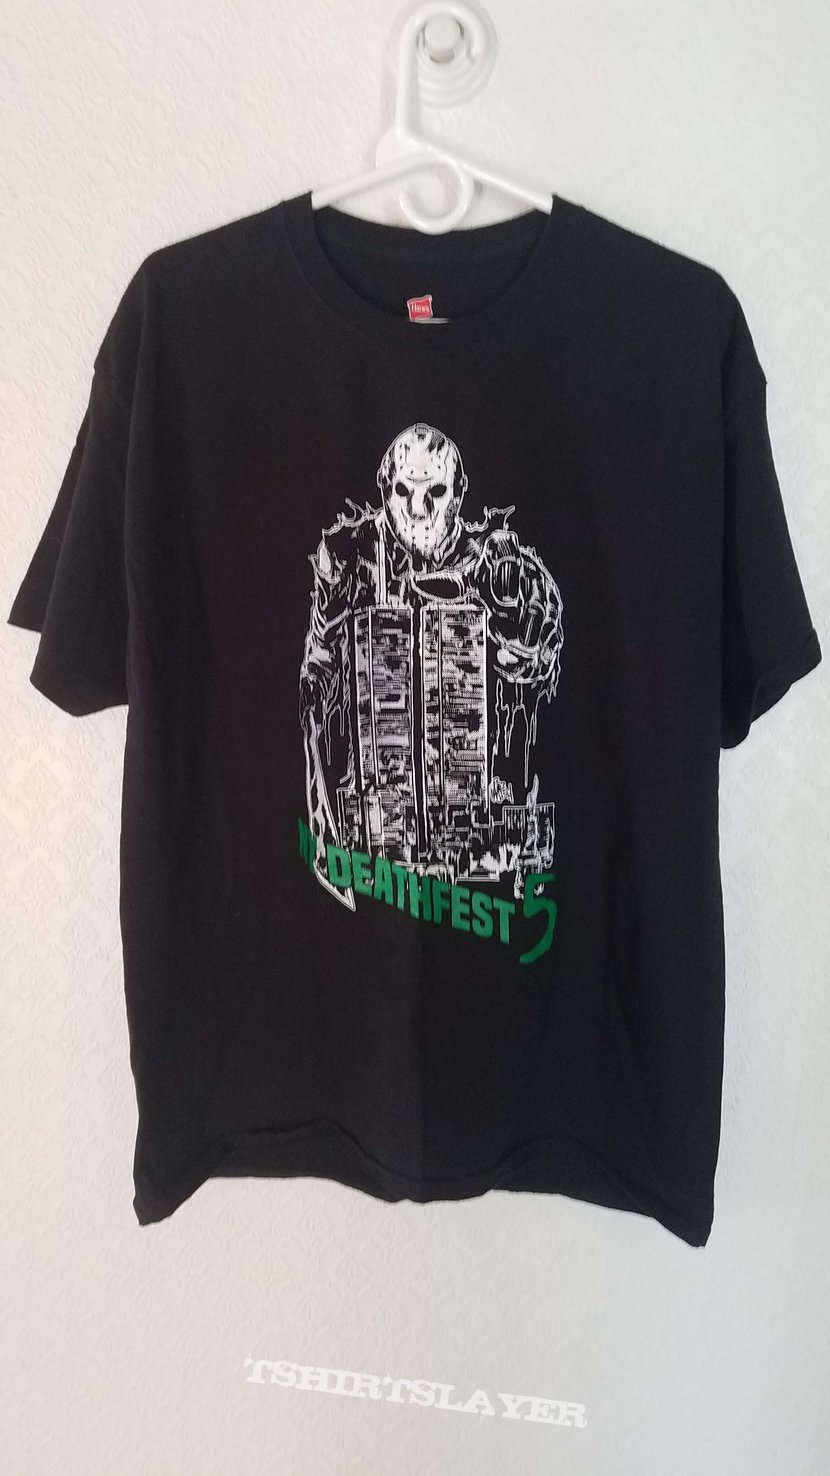 Malignancy Ny Deathfest 5 Shirt